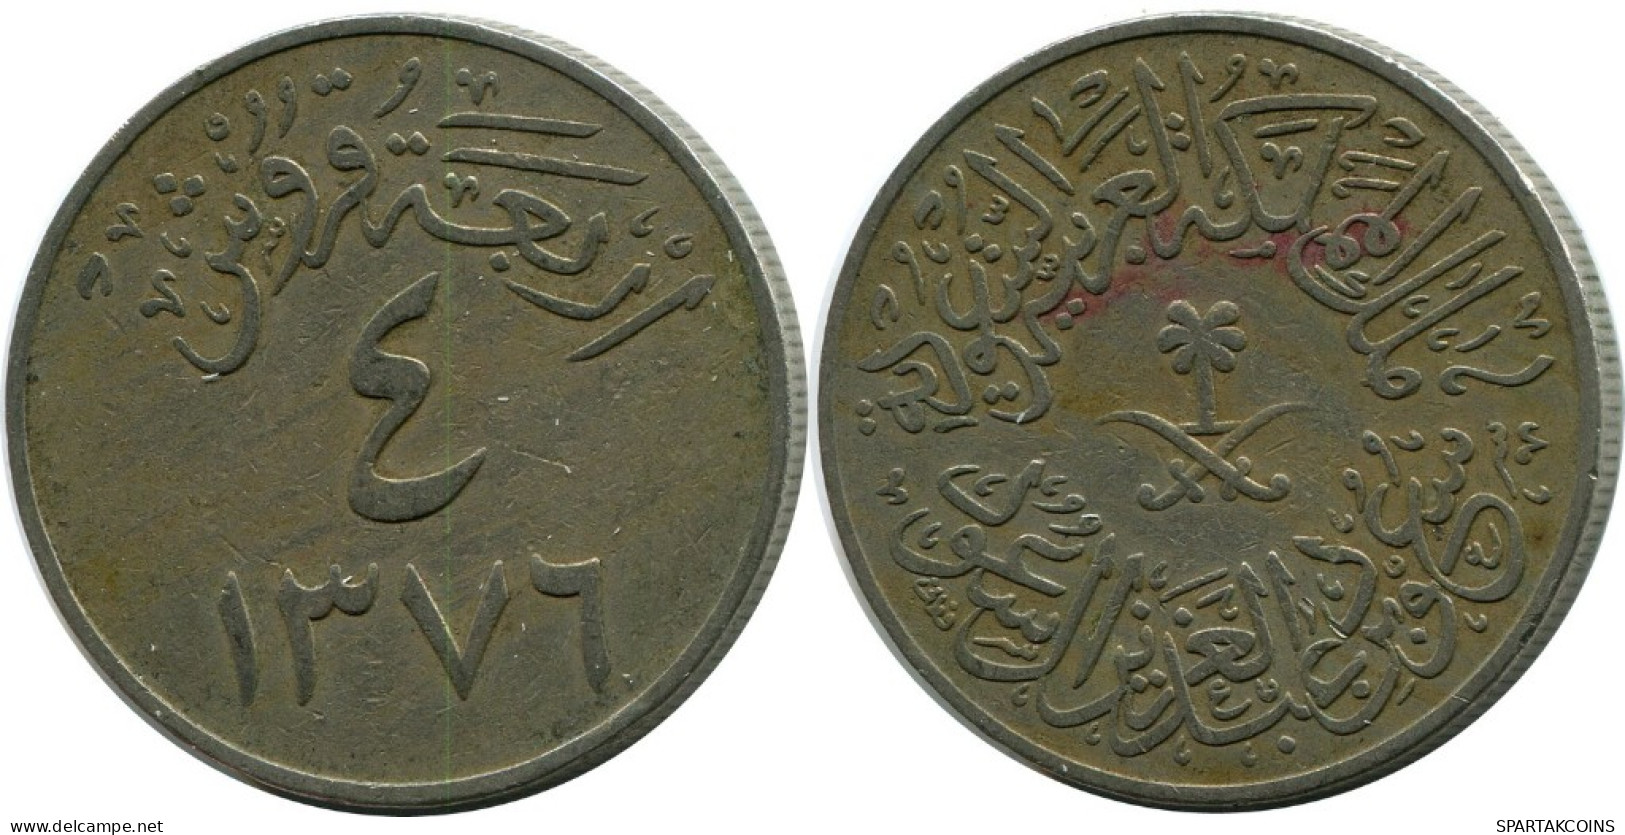 4 GHIRSH 1956 SAUDI ARABIA Islamic Coin #AK092.U.A - Arabia Saudita